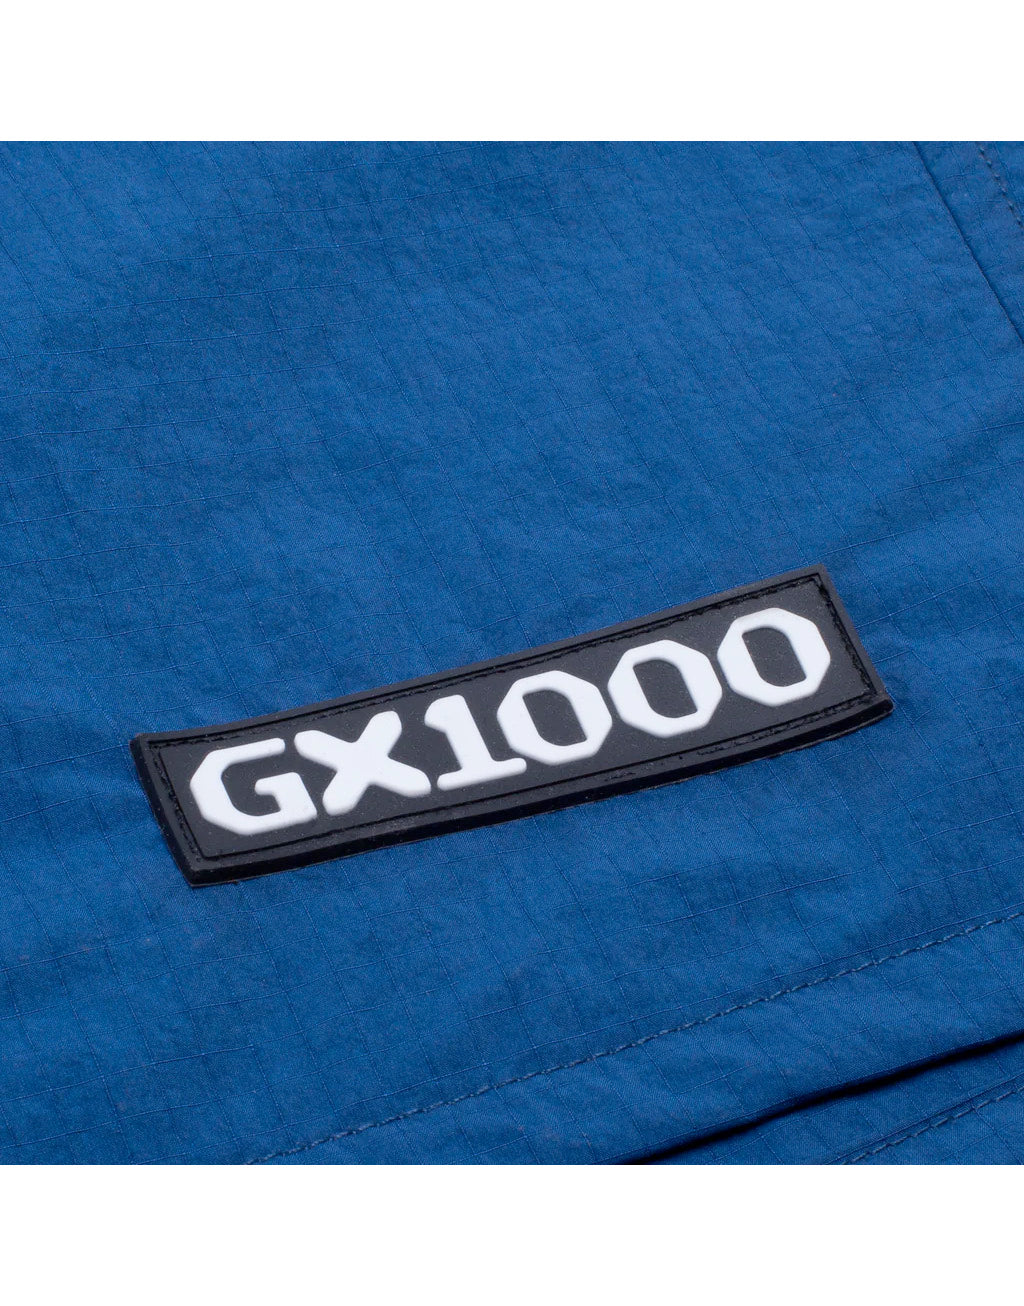 GX1000 Swim Trunk